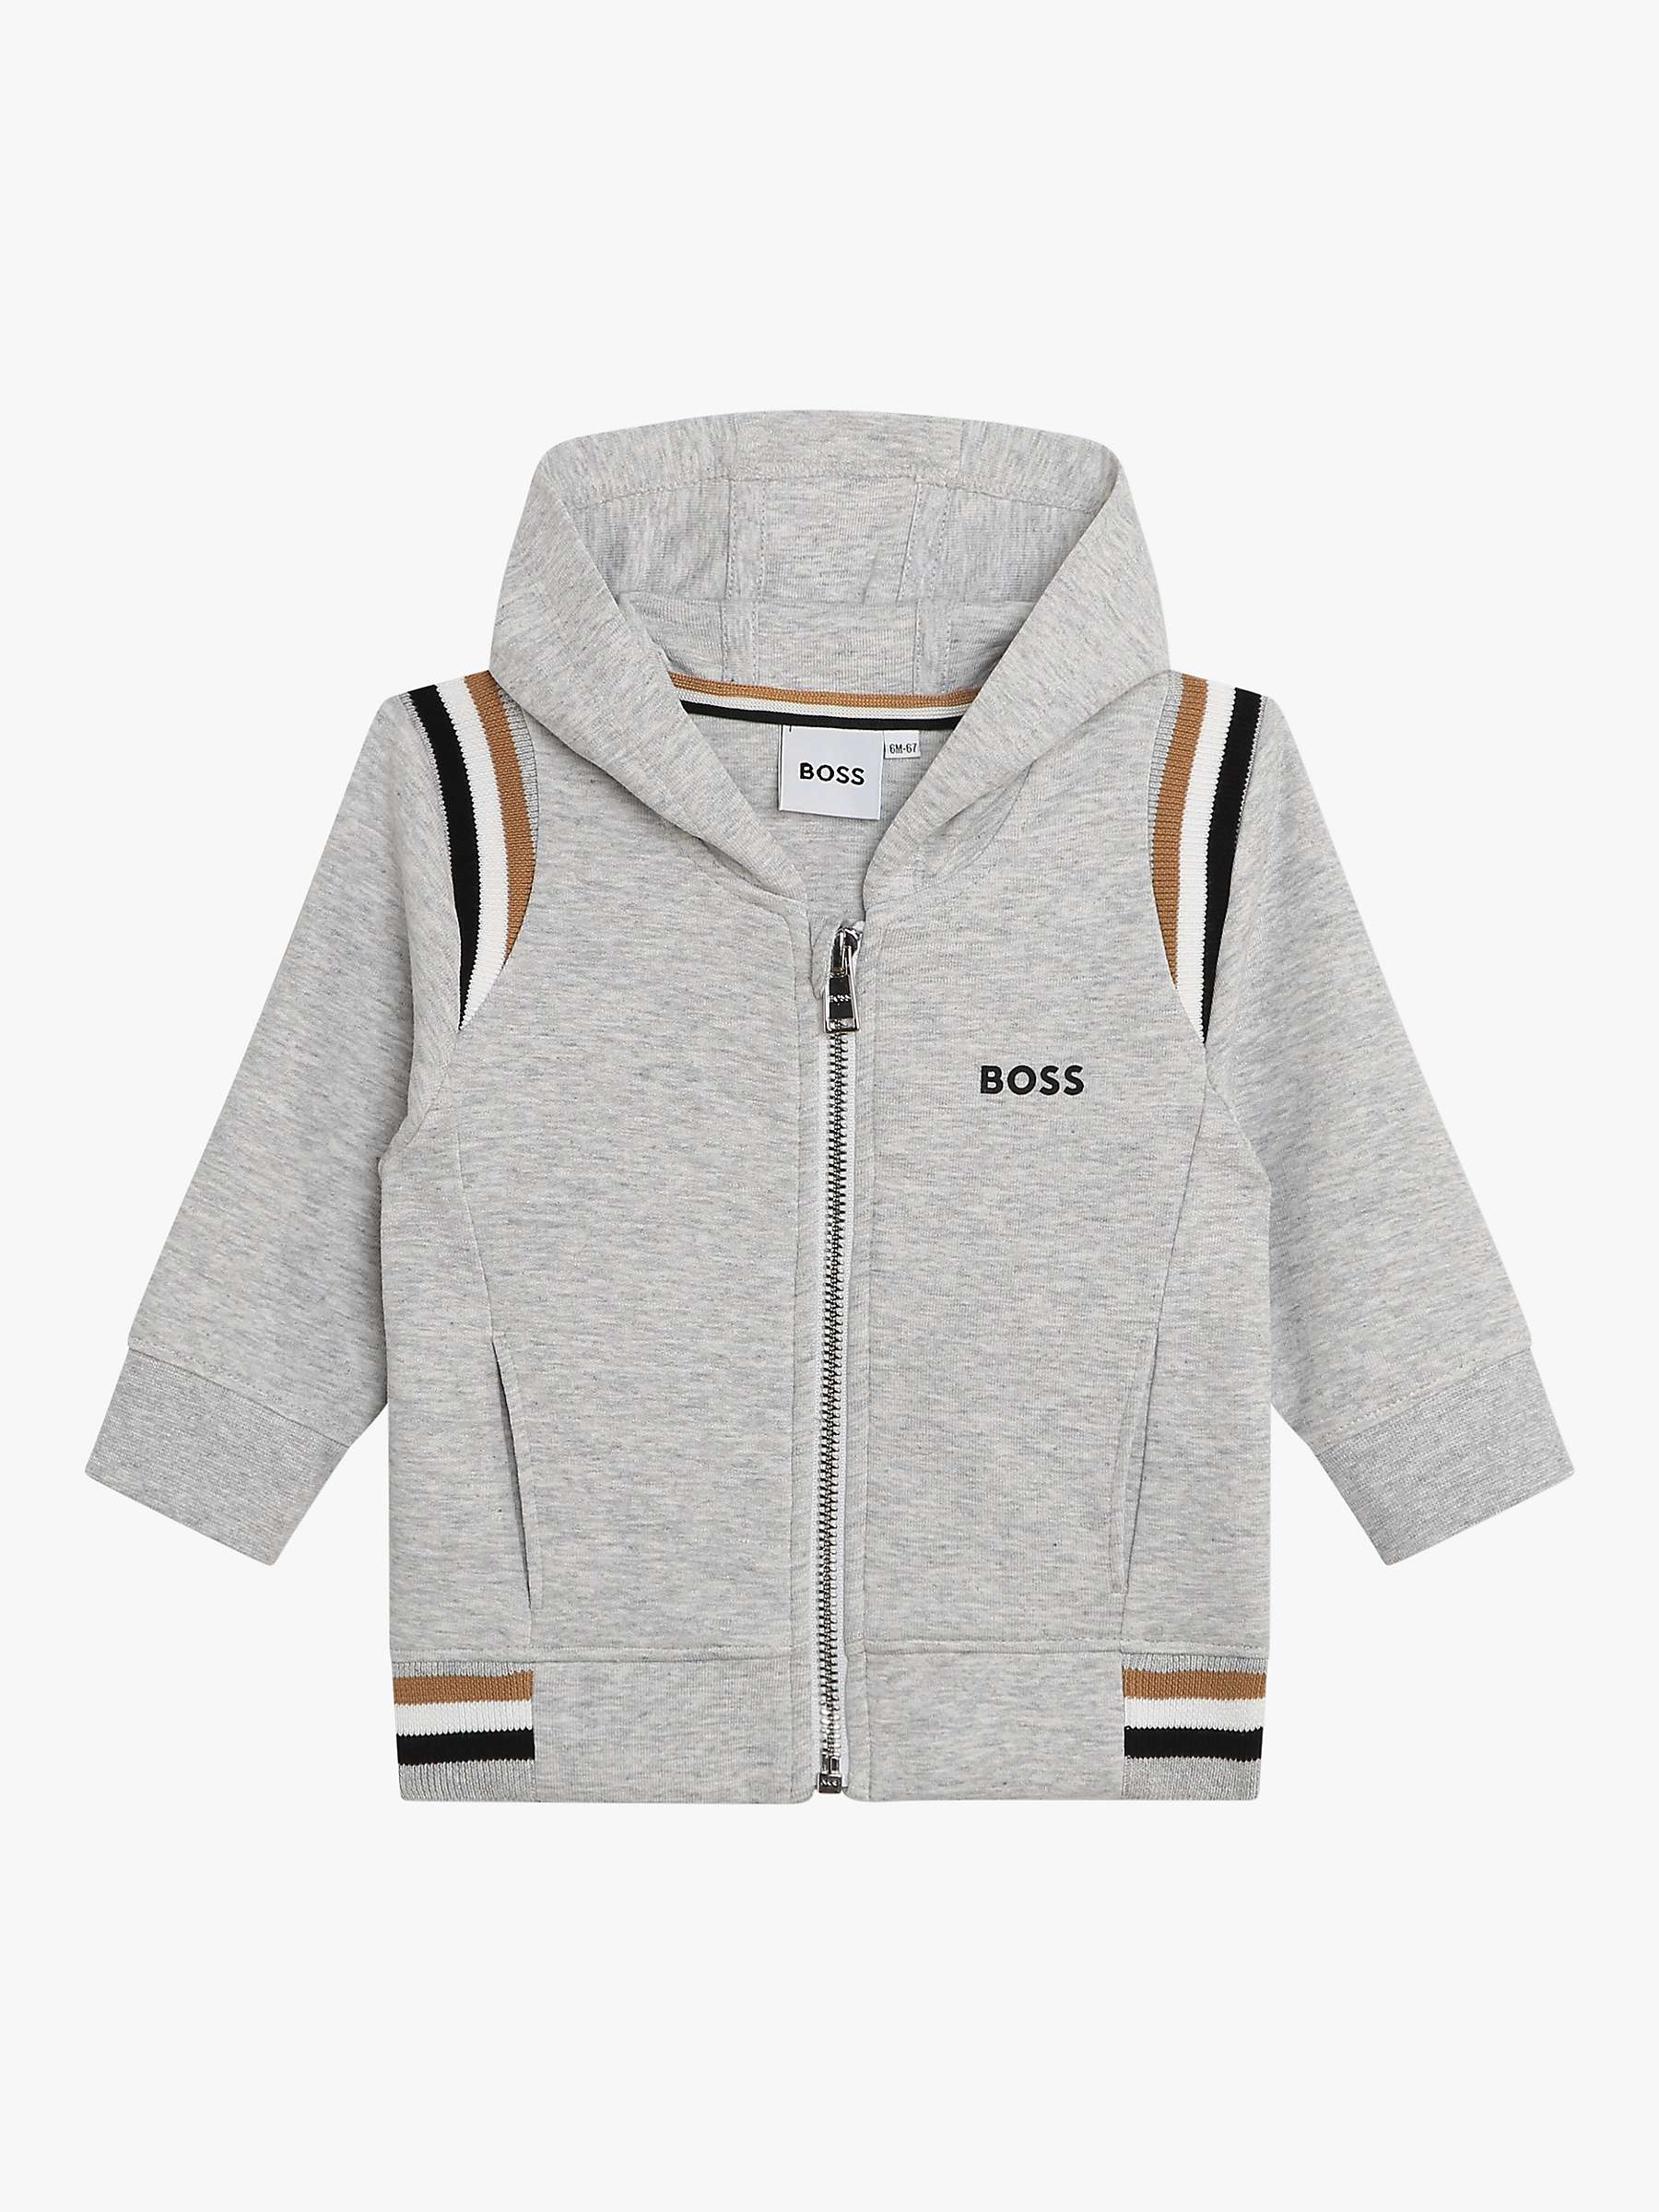 Buy BOSS Baby Stripe Tracksuit Set, Grey Online at johnlewis.com